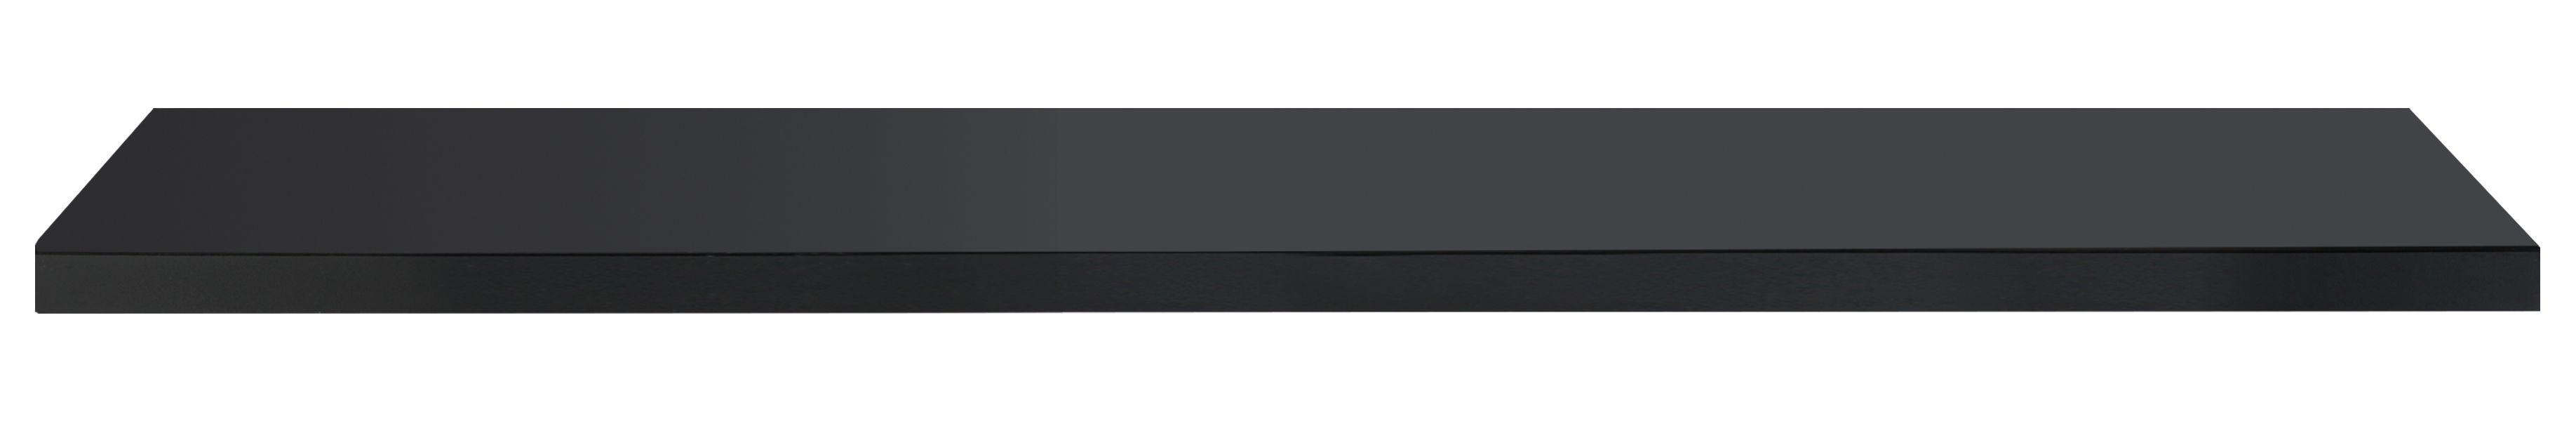 Image of Wickes Gloss Black Radiator Shelf - 18 x 150 x 900mm